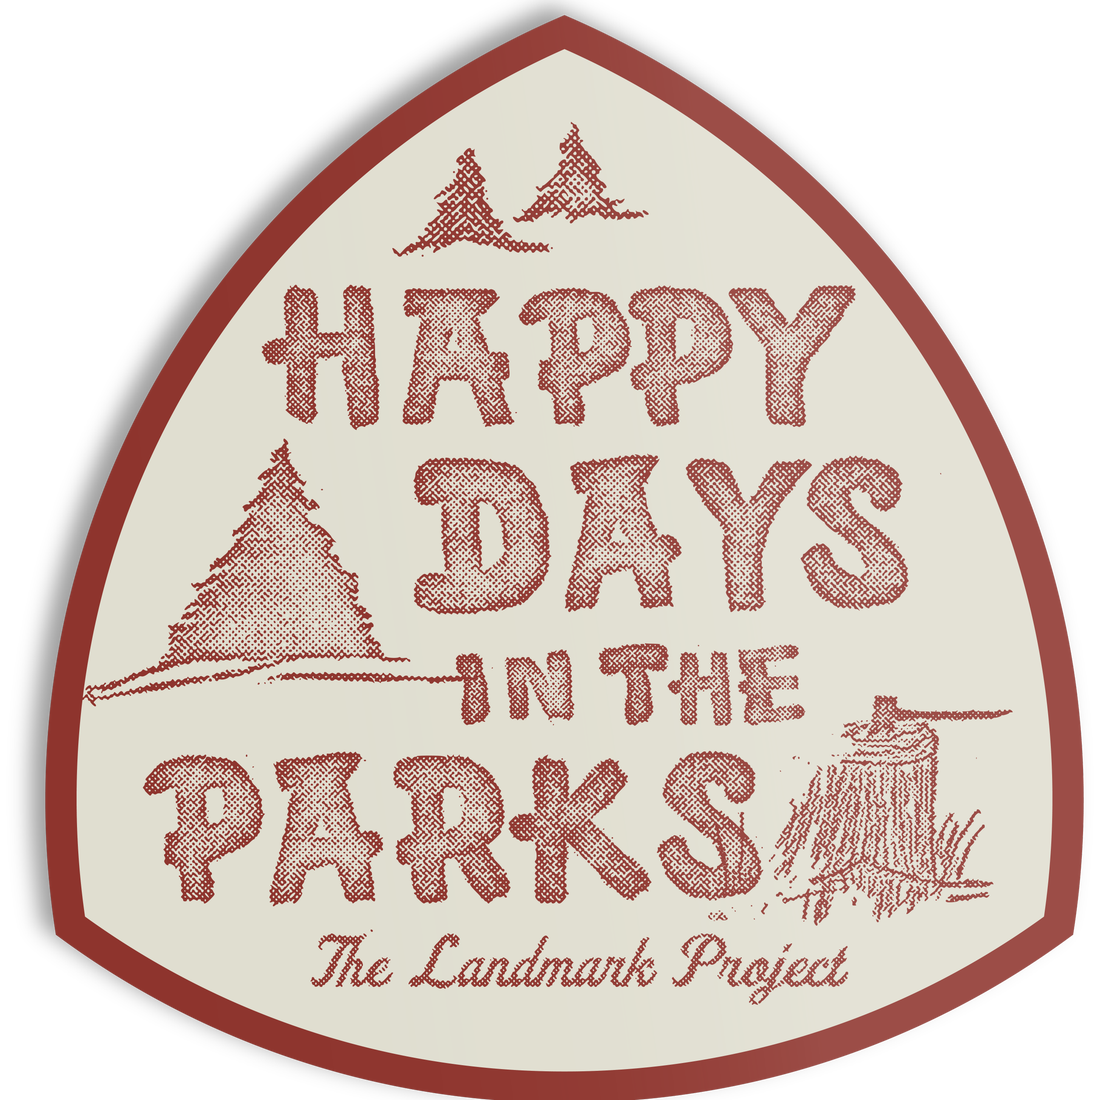 Happy Days Sticker